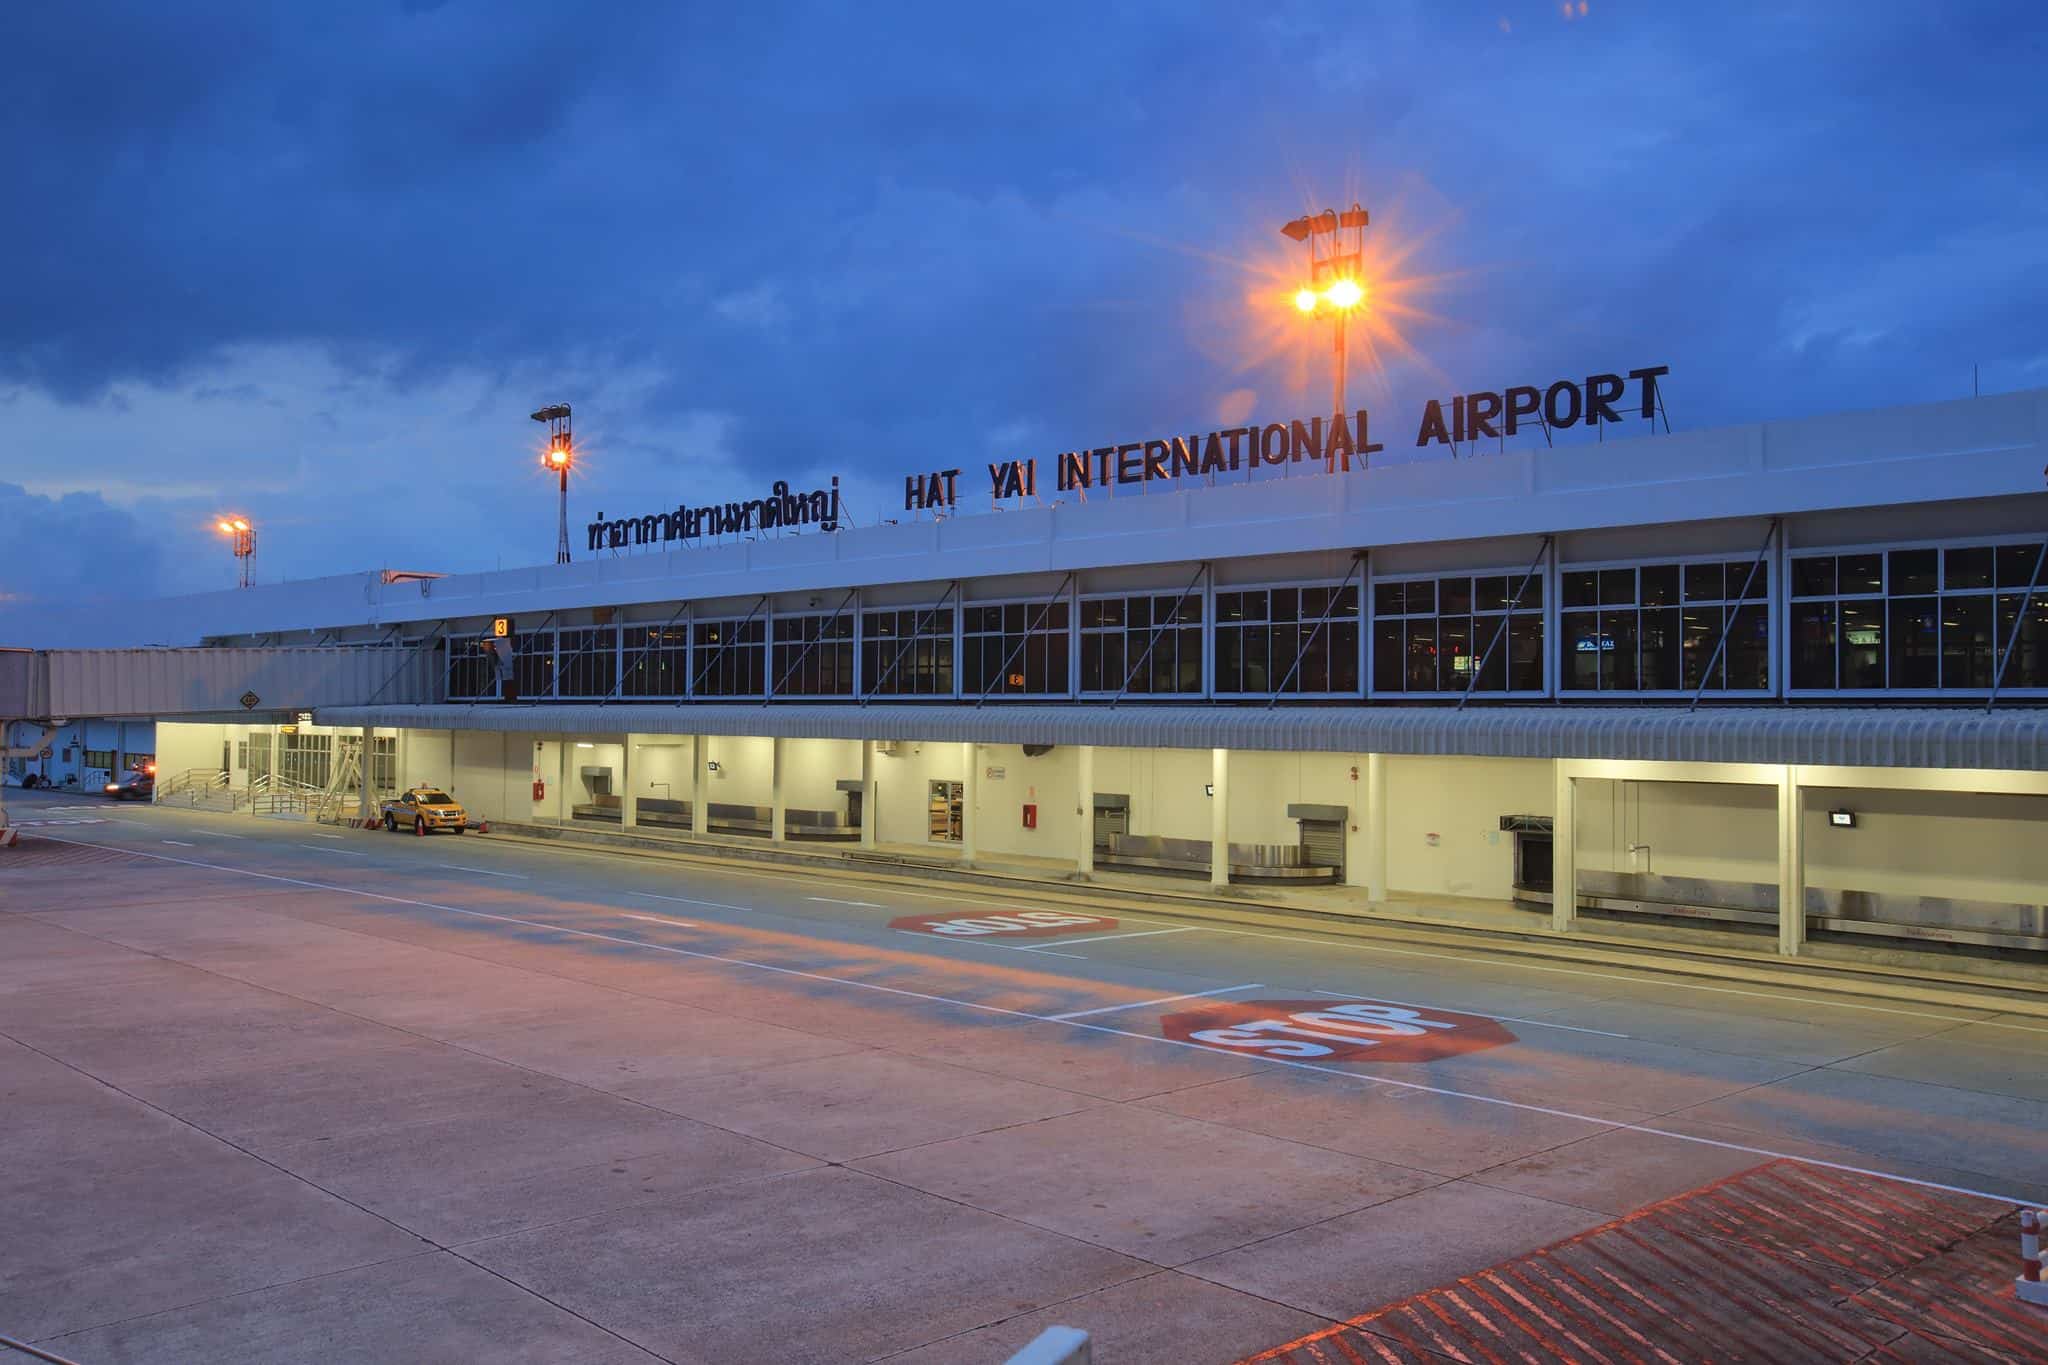 Hat Yai International Airport: Gateway to Southern Thailand